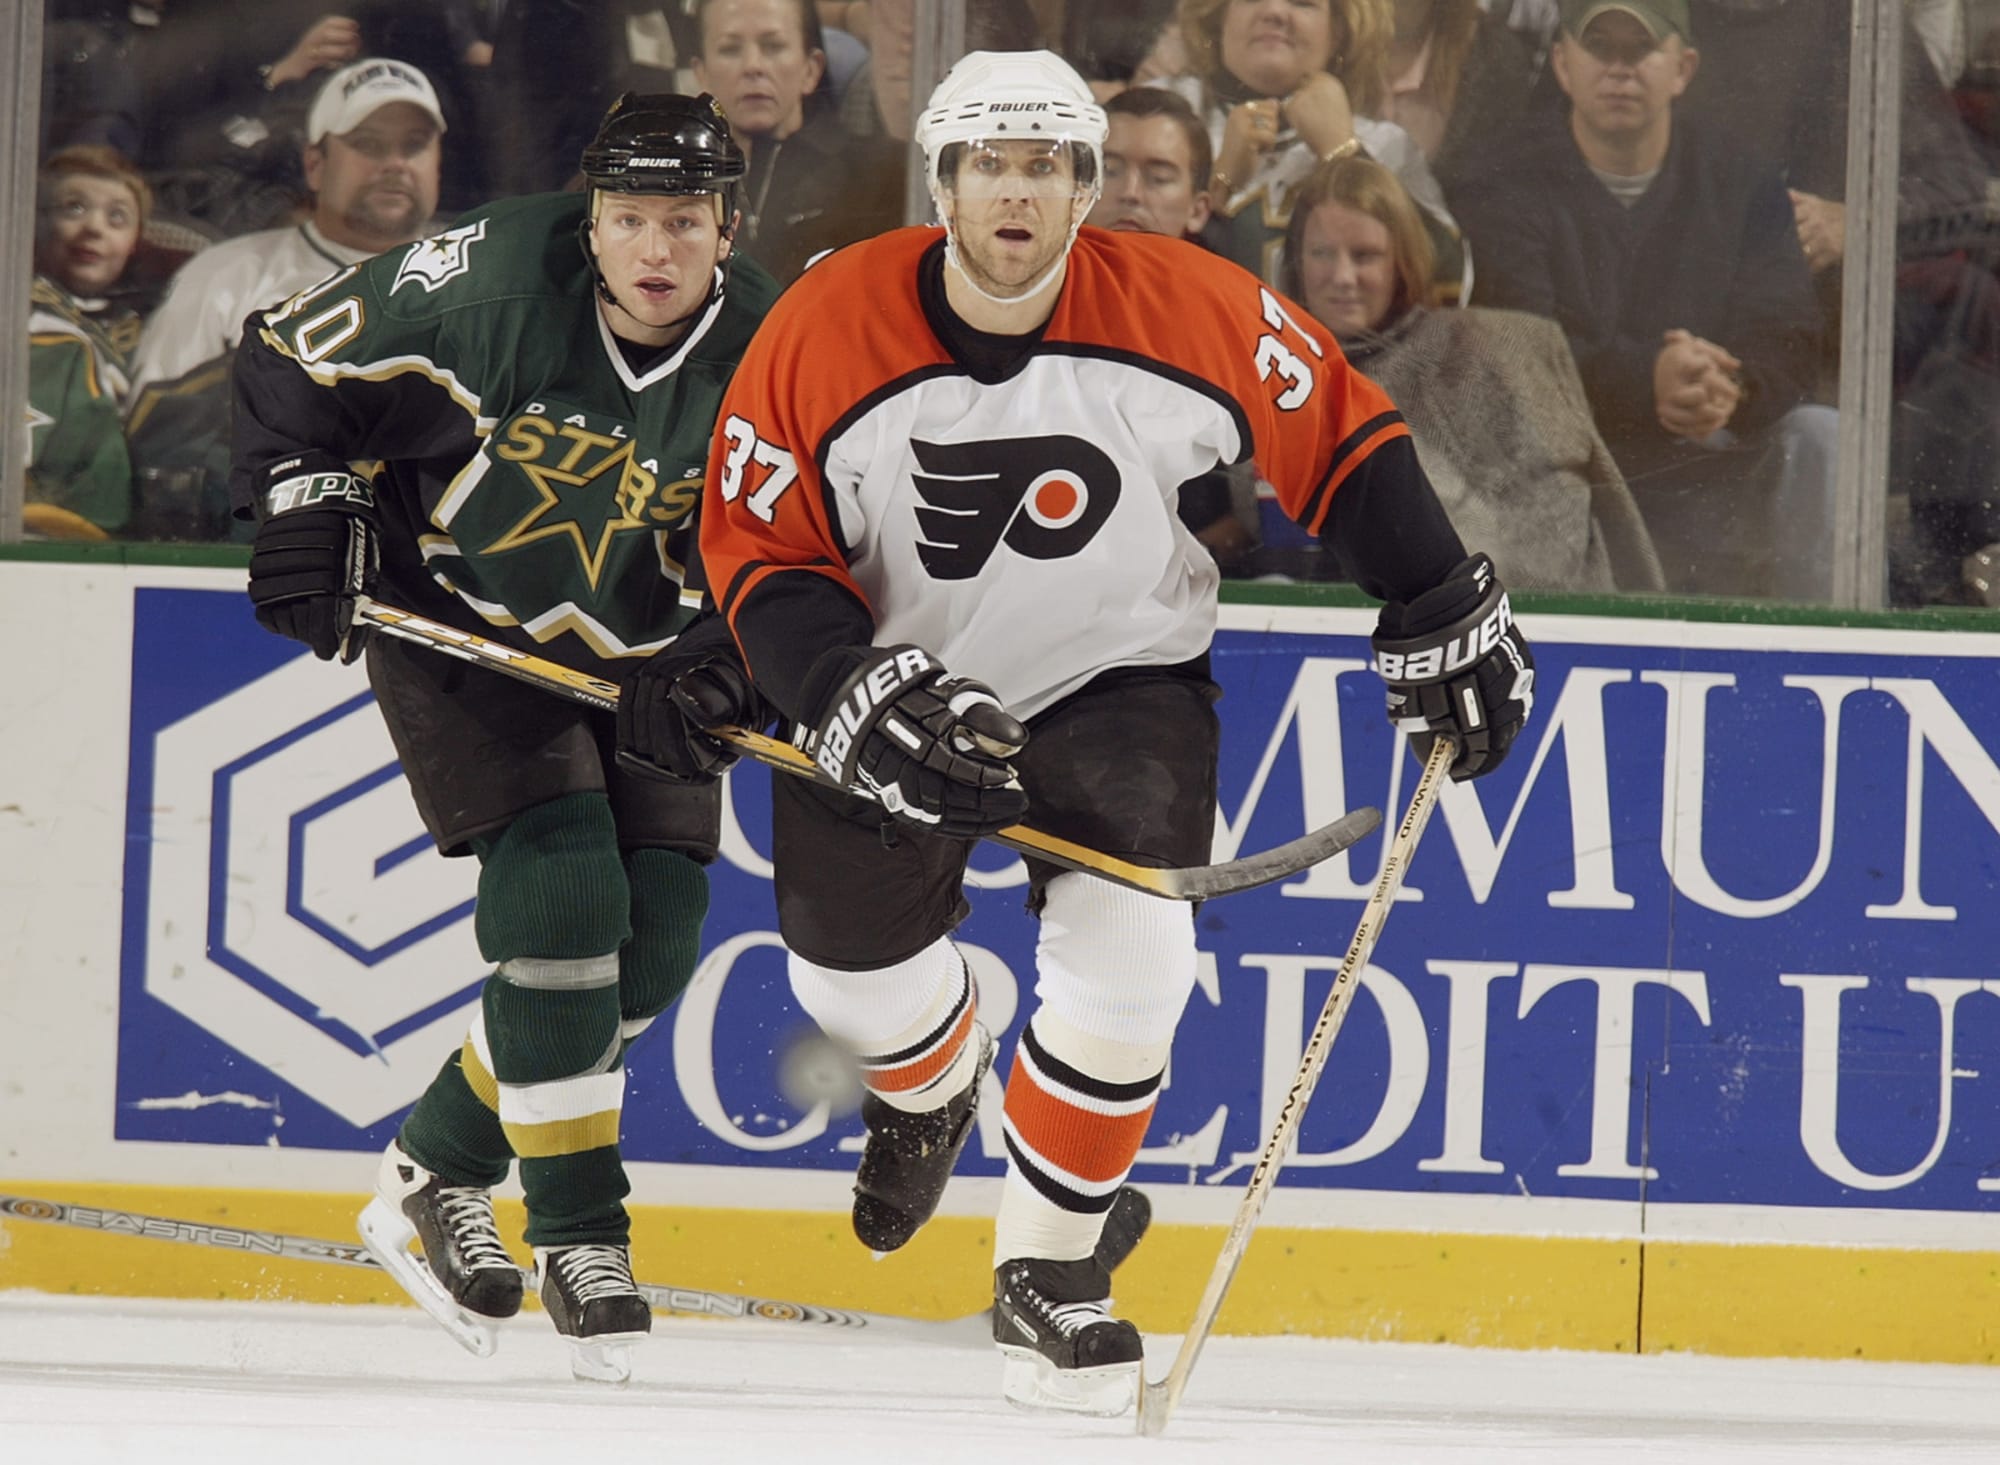 Jaromir Jagr scores twice, Chris Pronger injured in Philadelphia Flyers'  win 